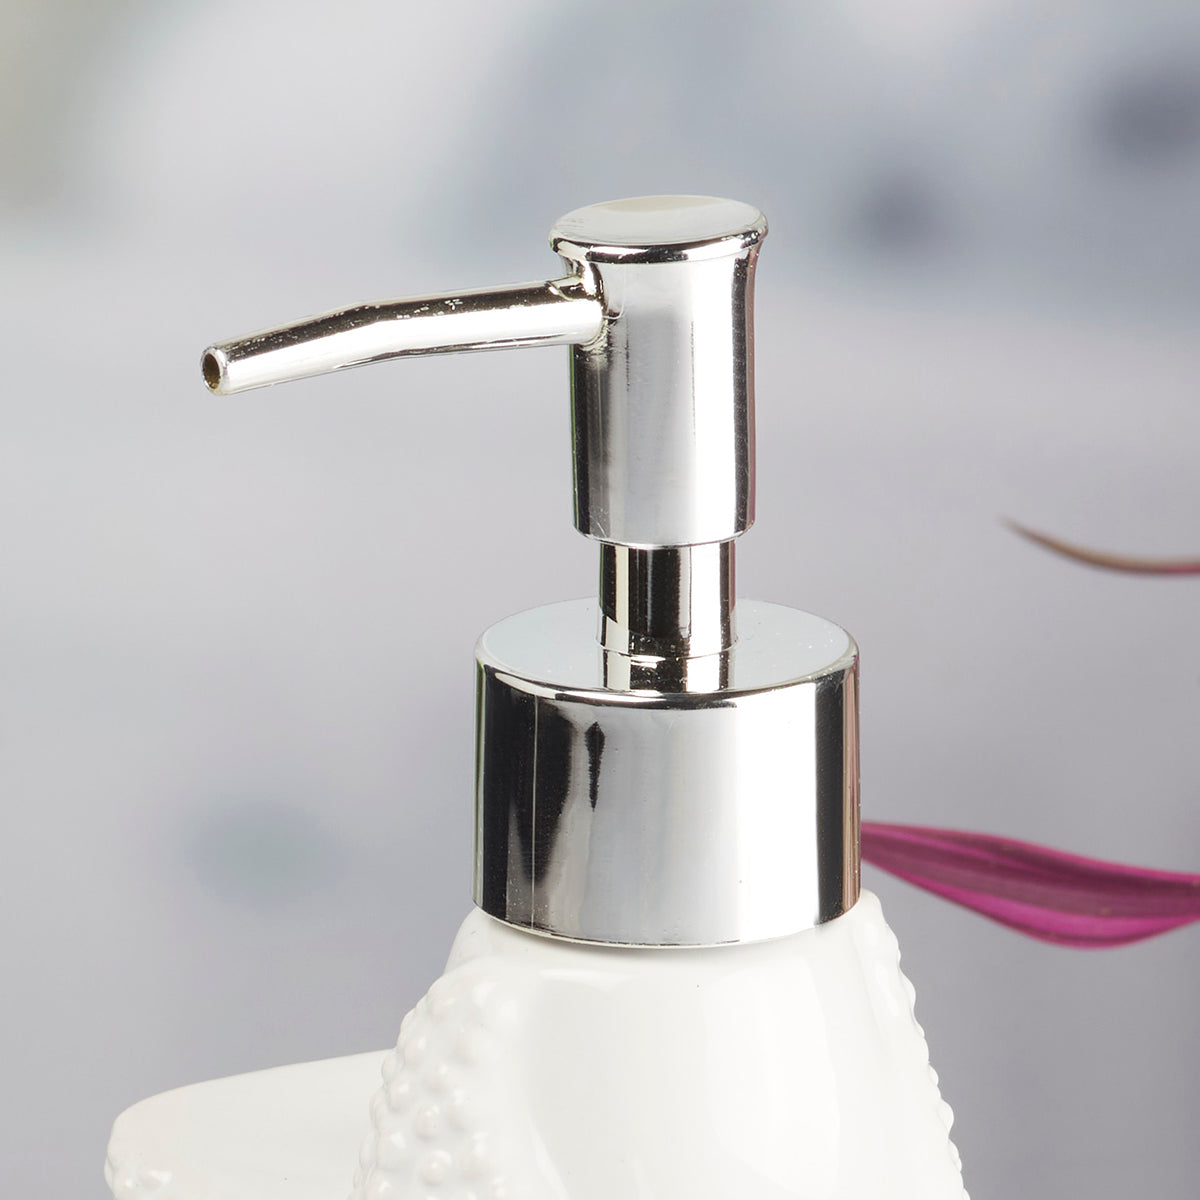 Ceramic Soap Dispenser handwash Pump for Bathroom, Set of 1, White (8465)